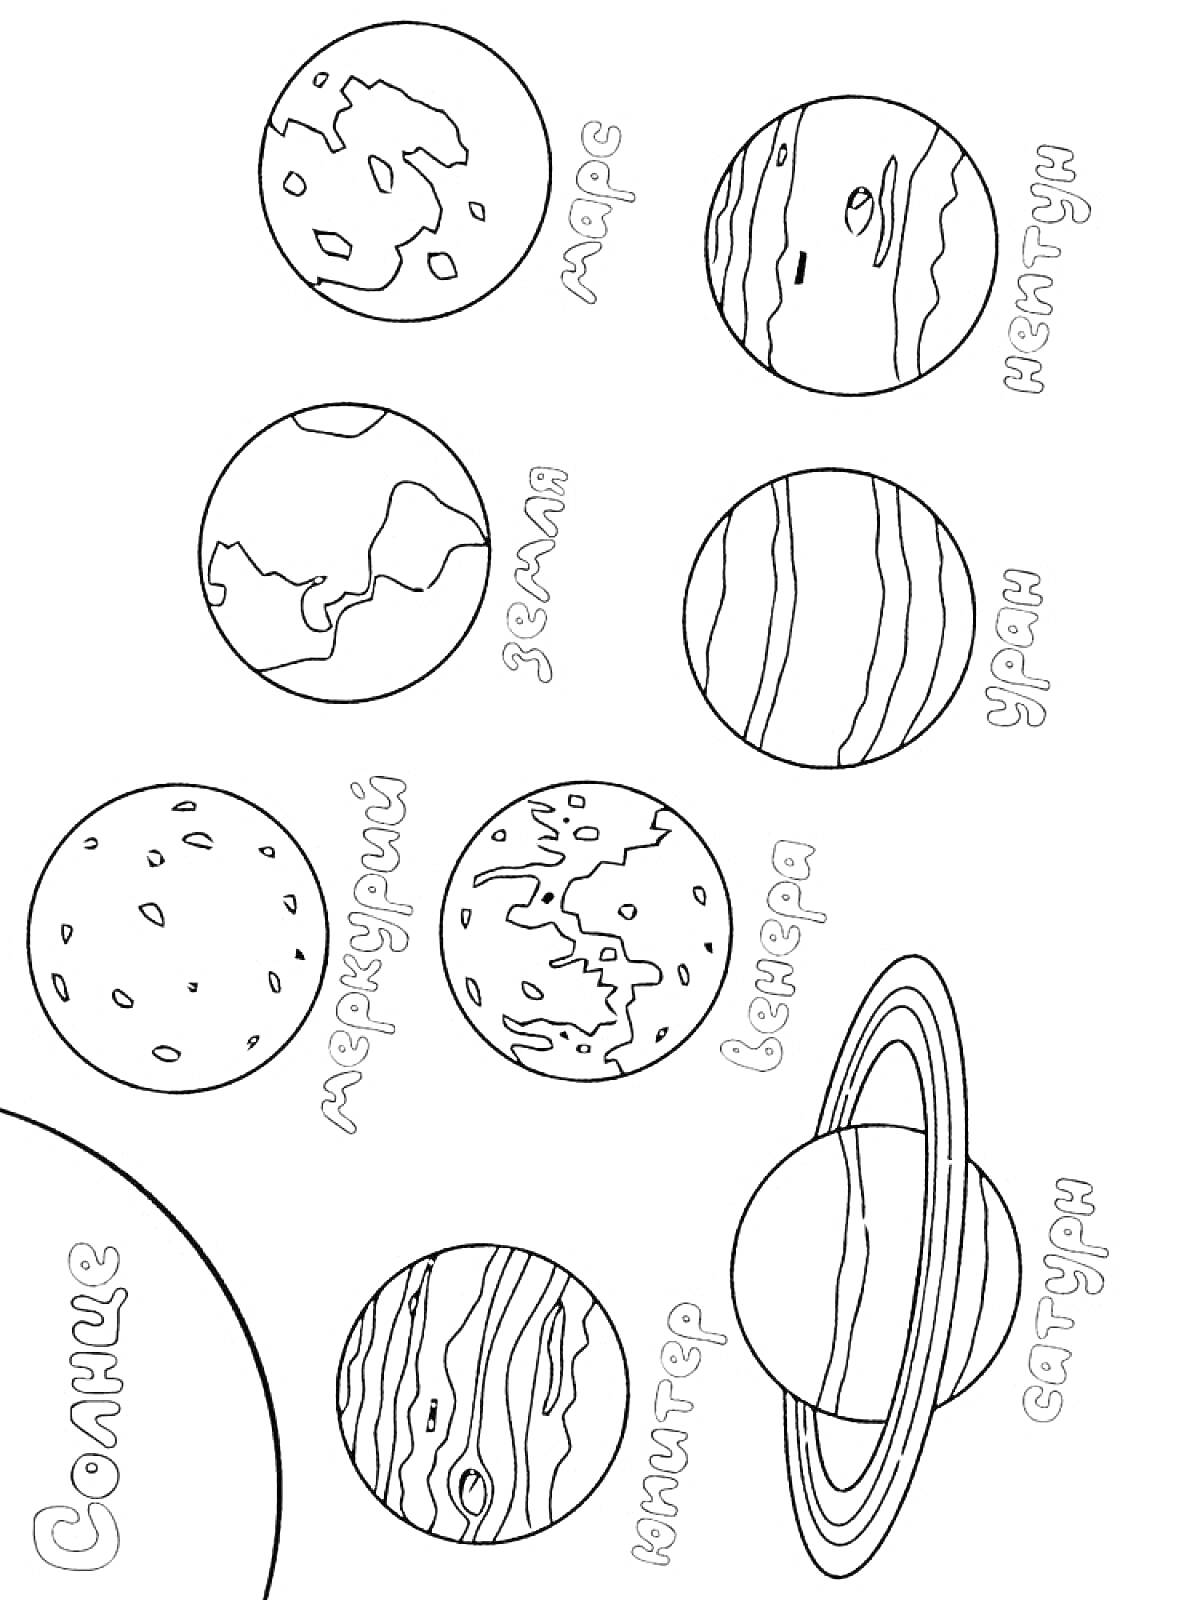 Раскраска Солнце, Меркурий, Земля, Венера, Юпитер, Марс, Нептун, Уран, Сатурн